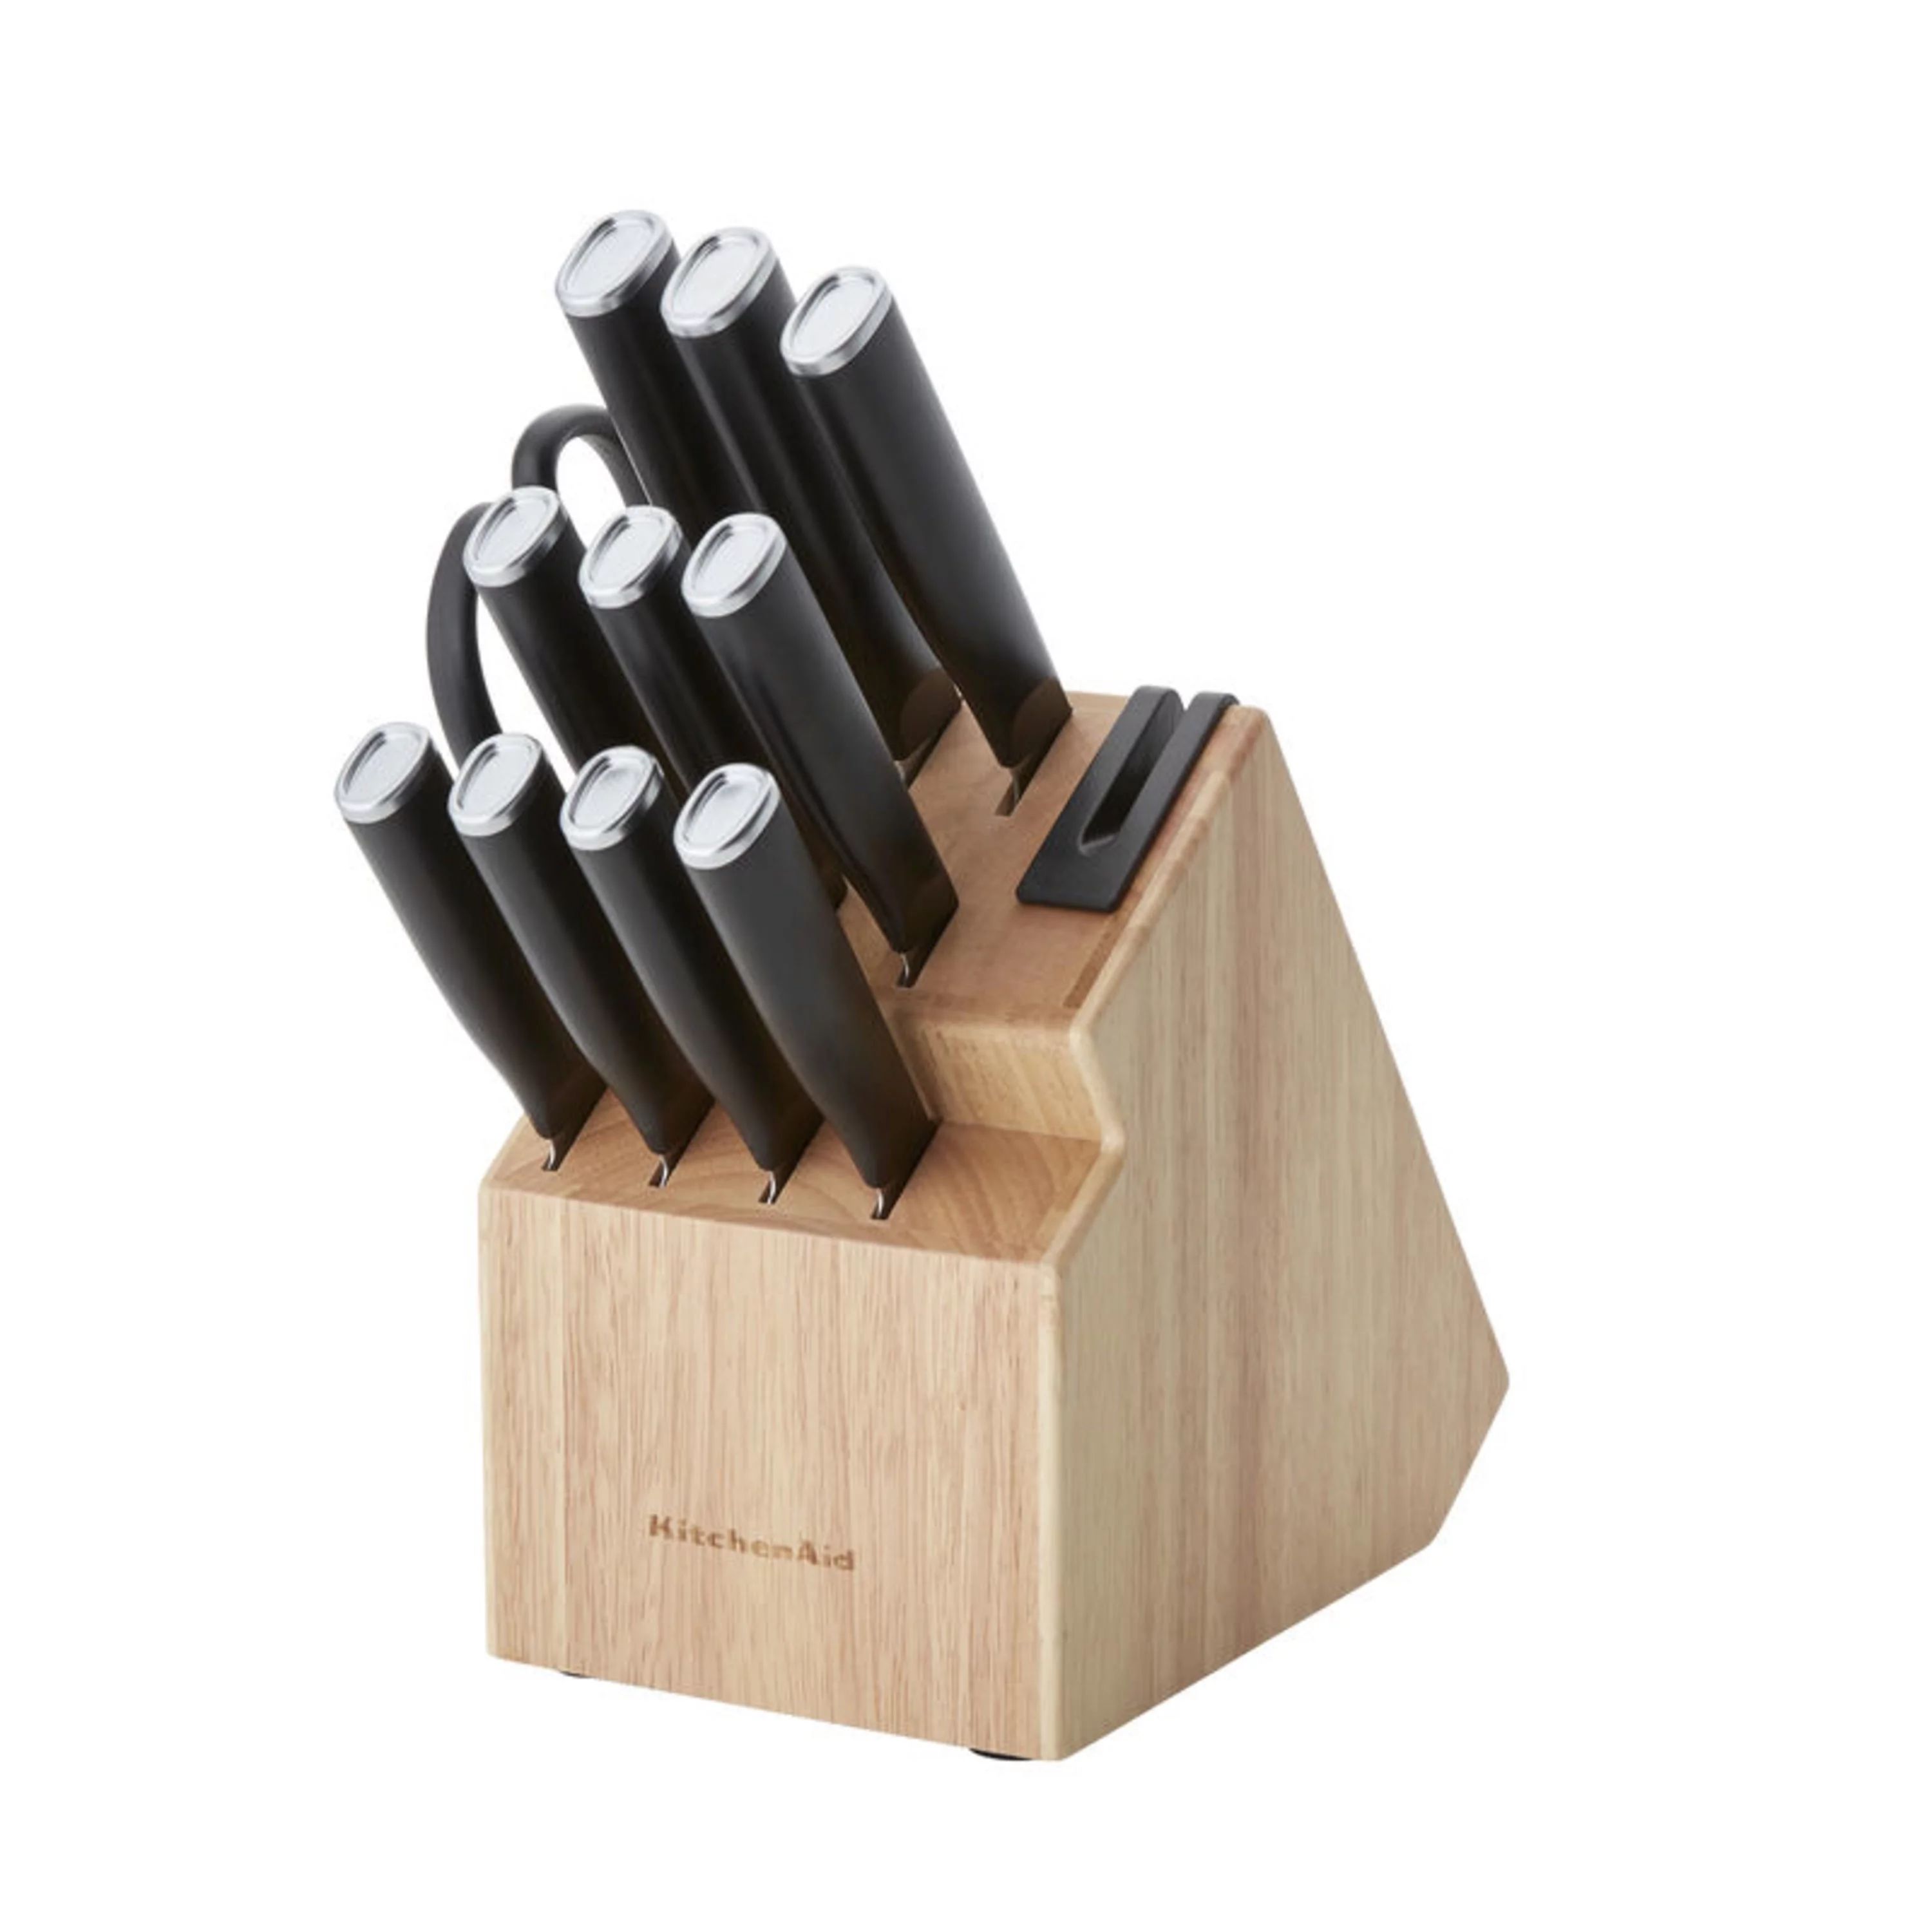 KitchenAid Classic Japanese Steel 12-Piece Knife Block Set with Built-in Knife Sharpener, Black -... | Walmart (US)